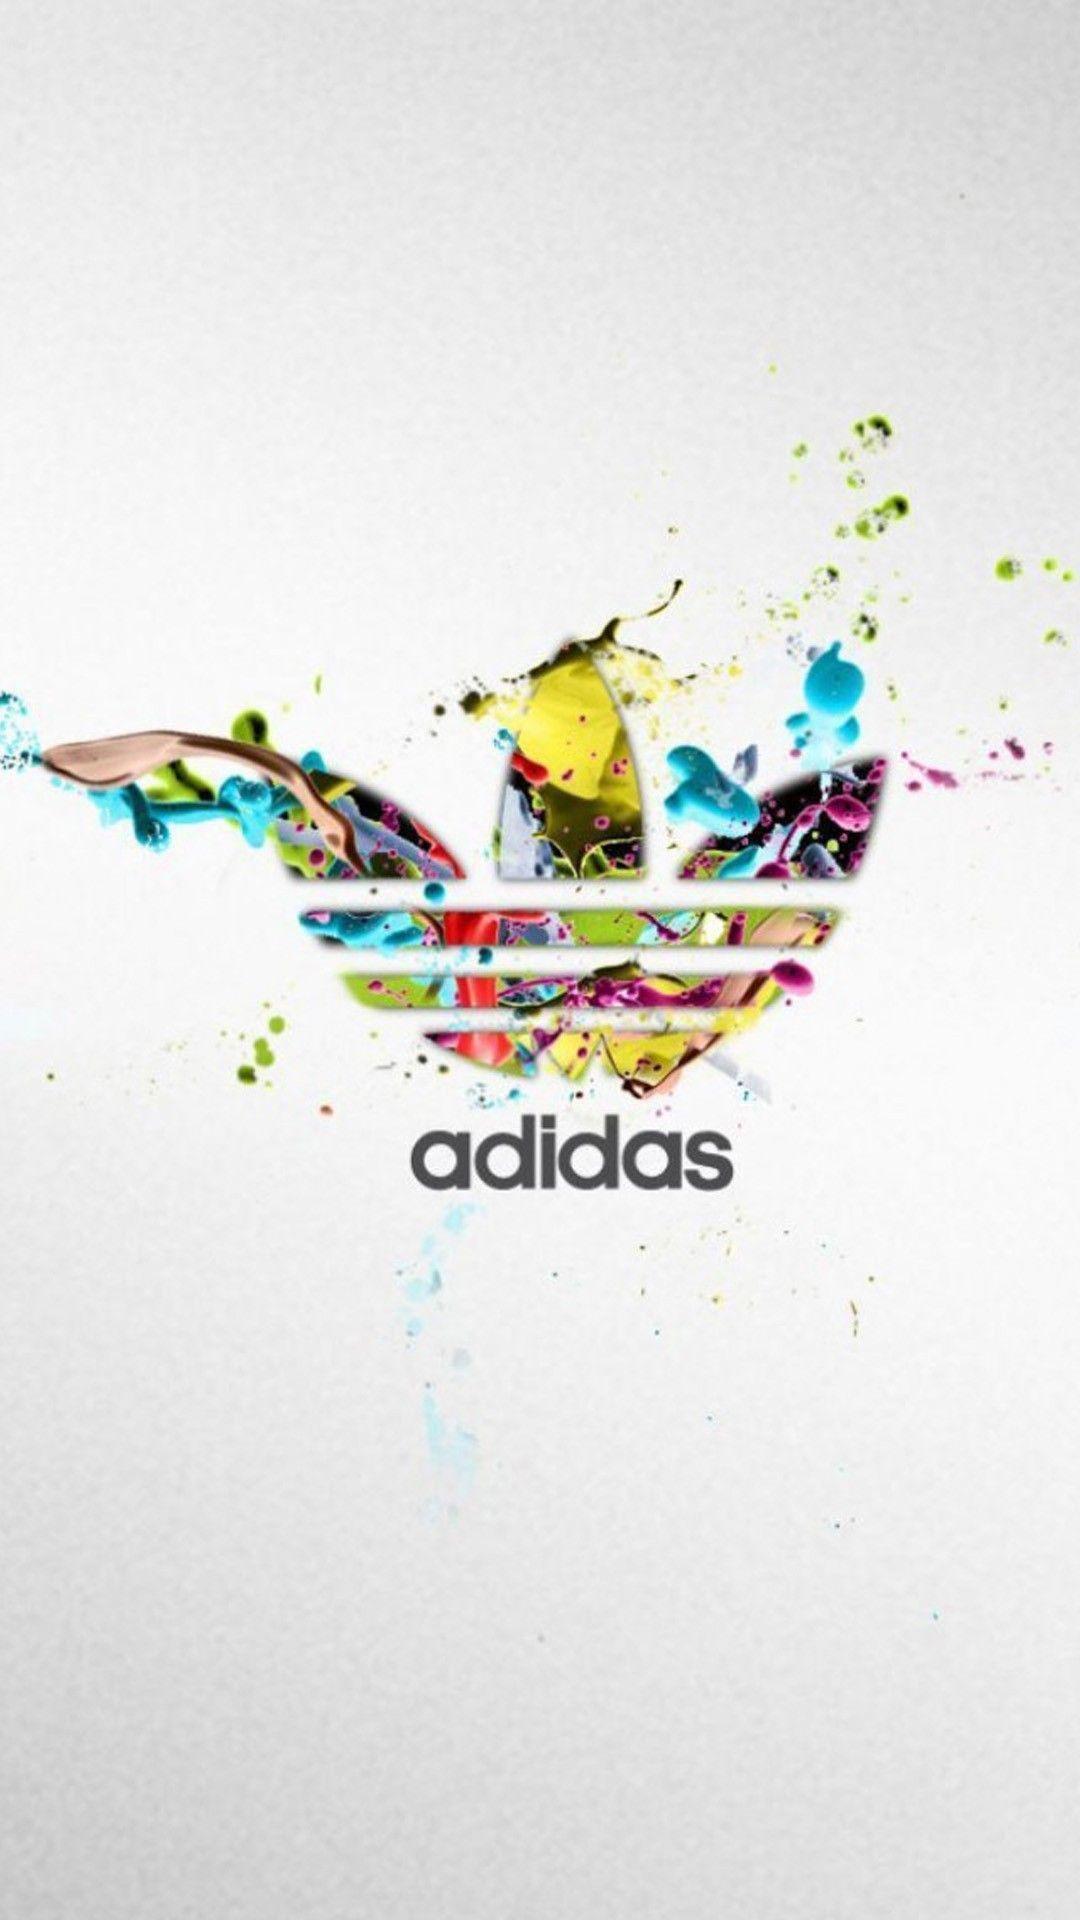 Coreful the Adidas Logo - Sports iPhone 6 Plus Wallpapers - Adidas Colorful Logo Splash iPhone ...